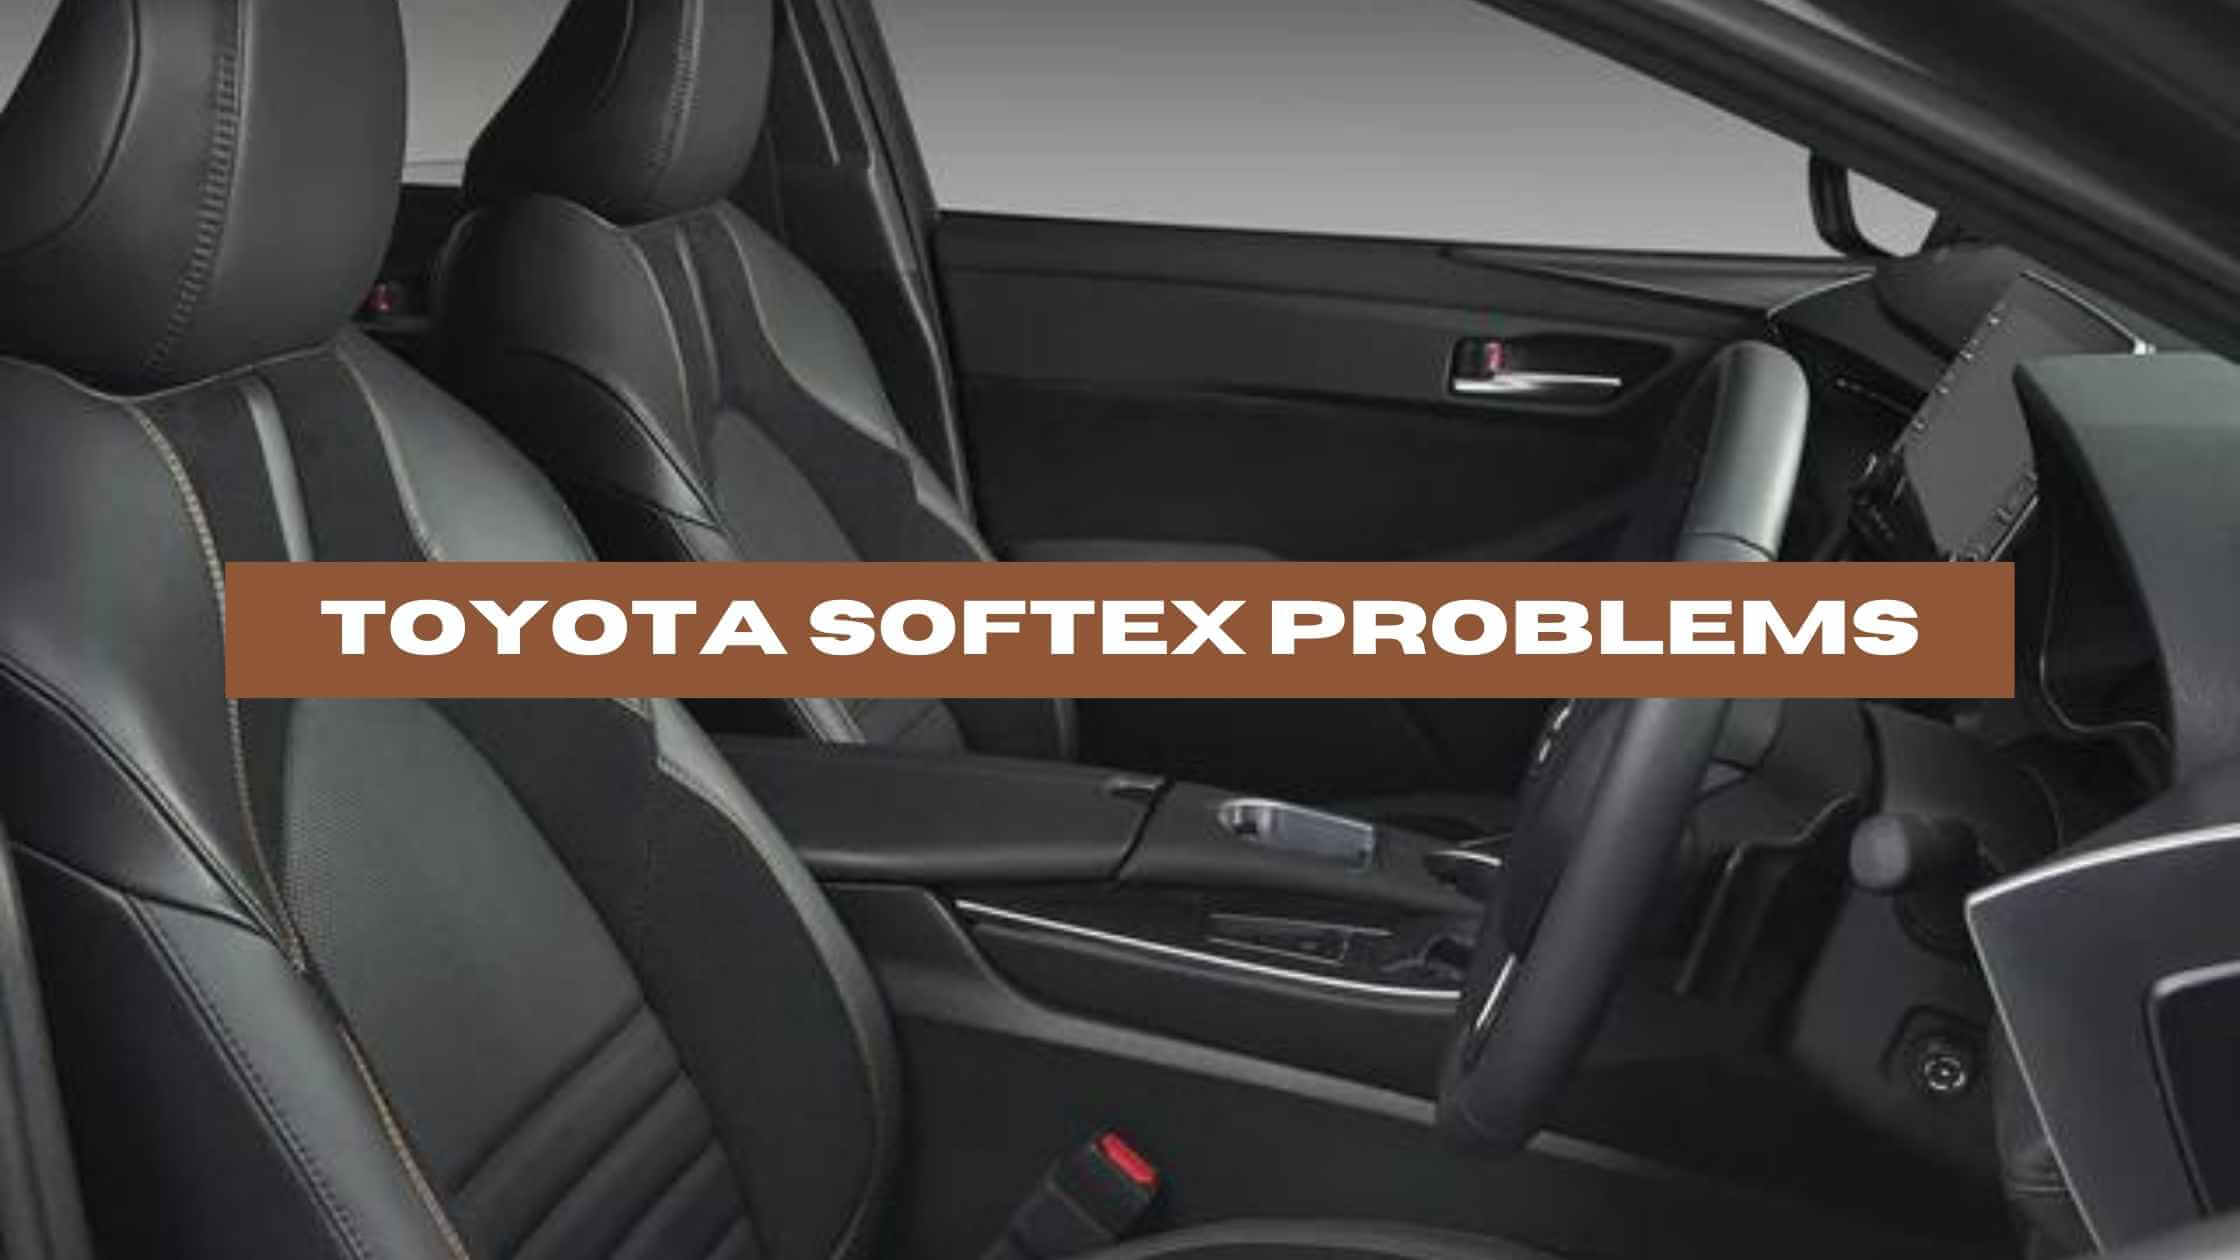 Toyota Softex Problems